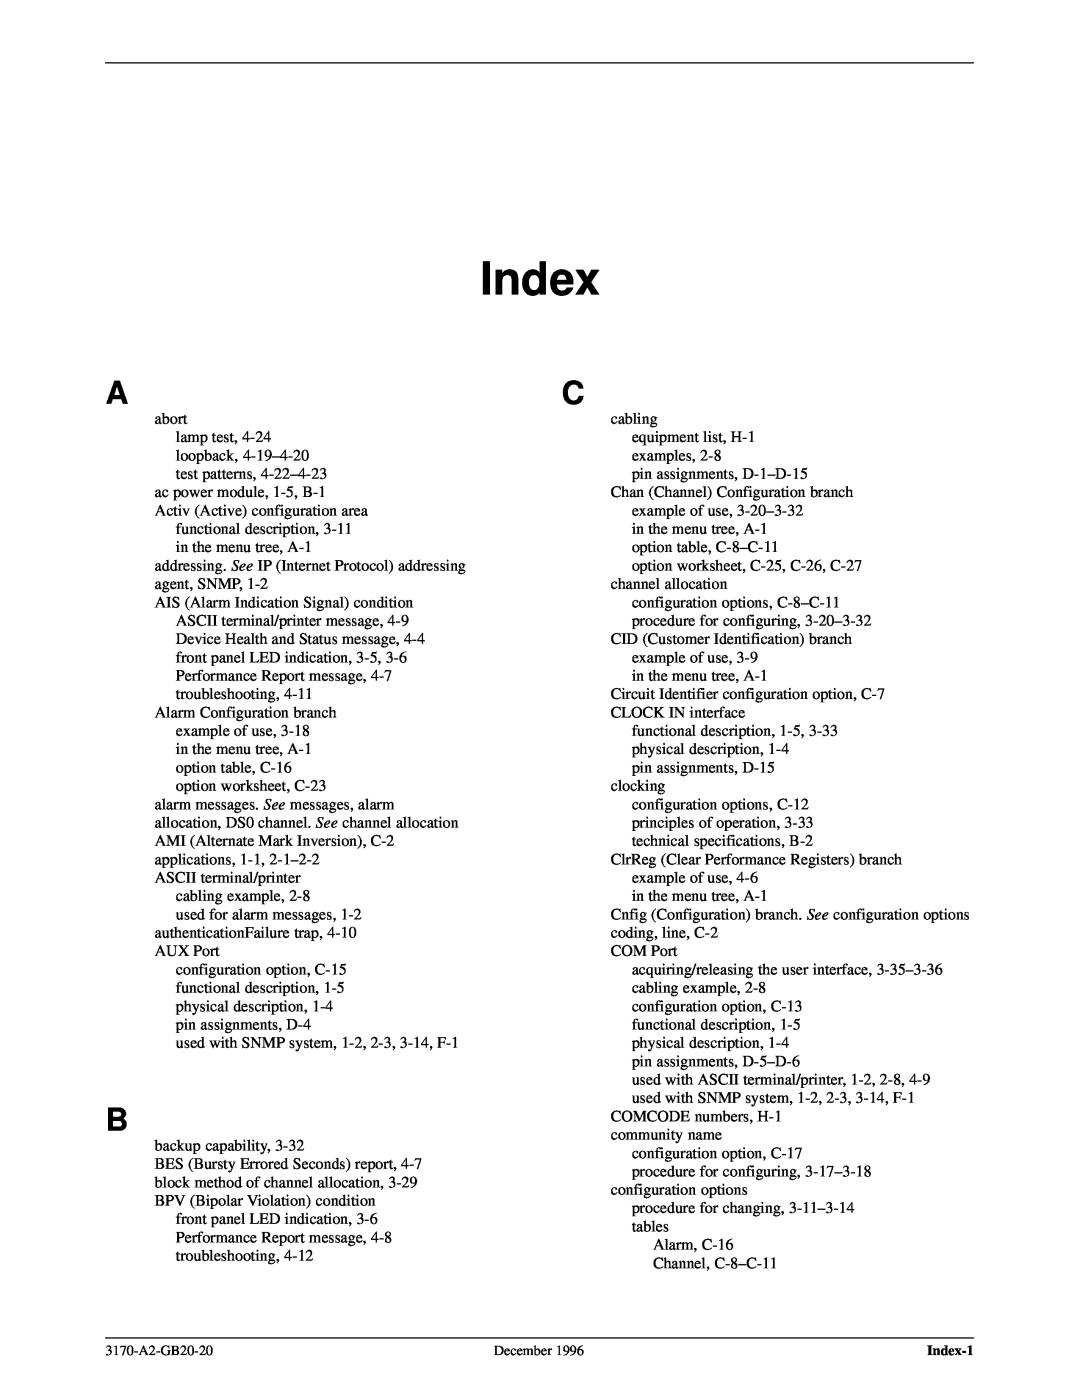 Paradyne 317x E1 manual Index 